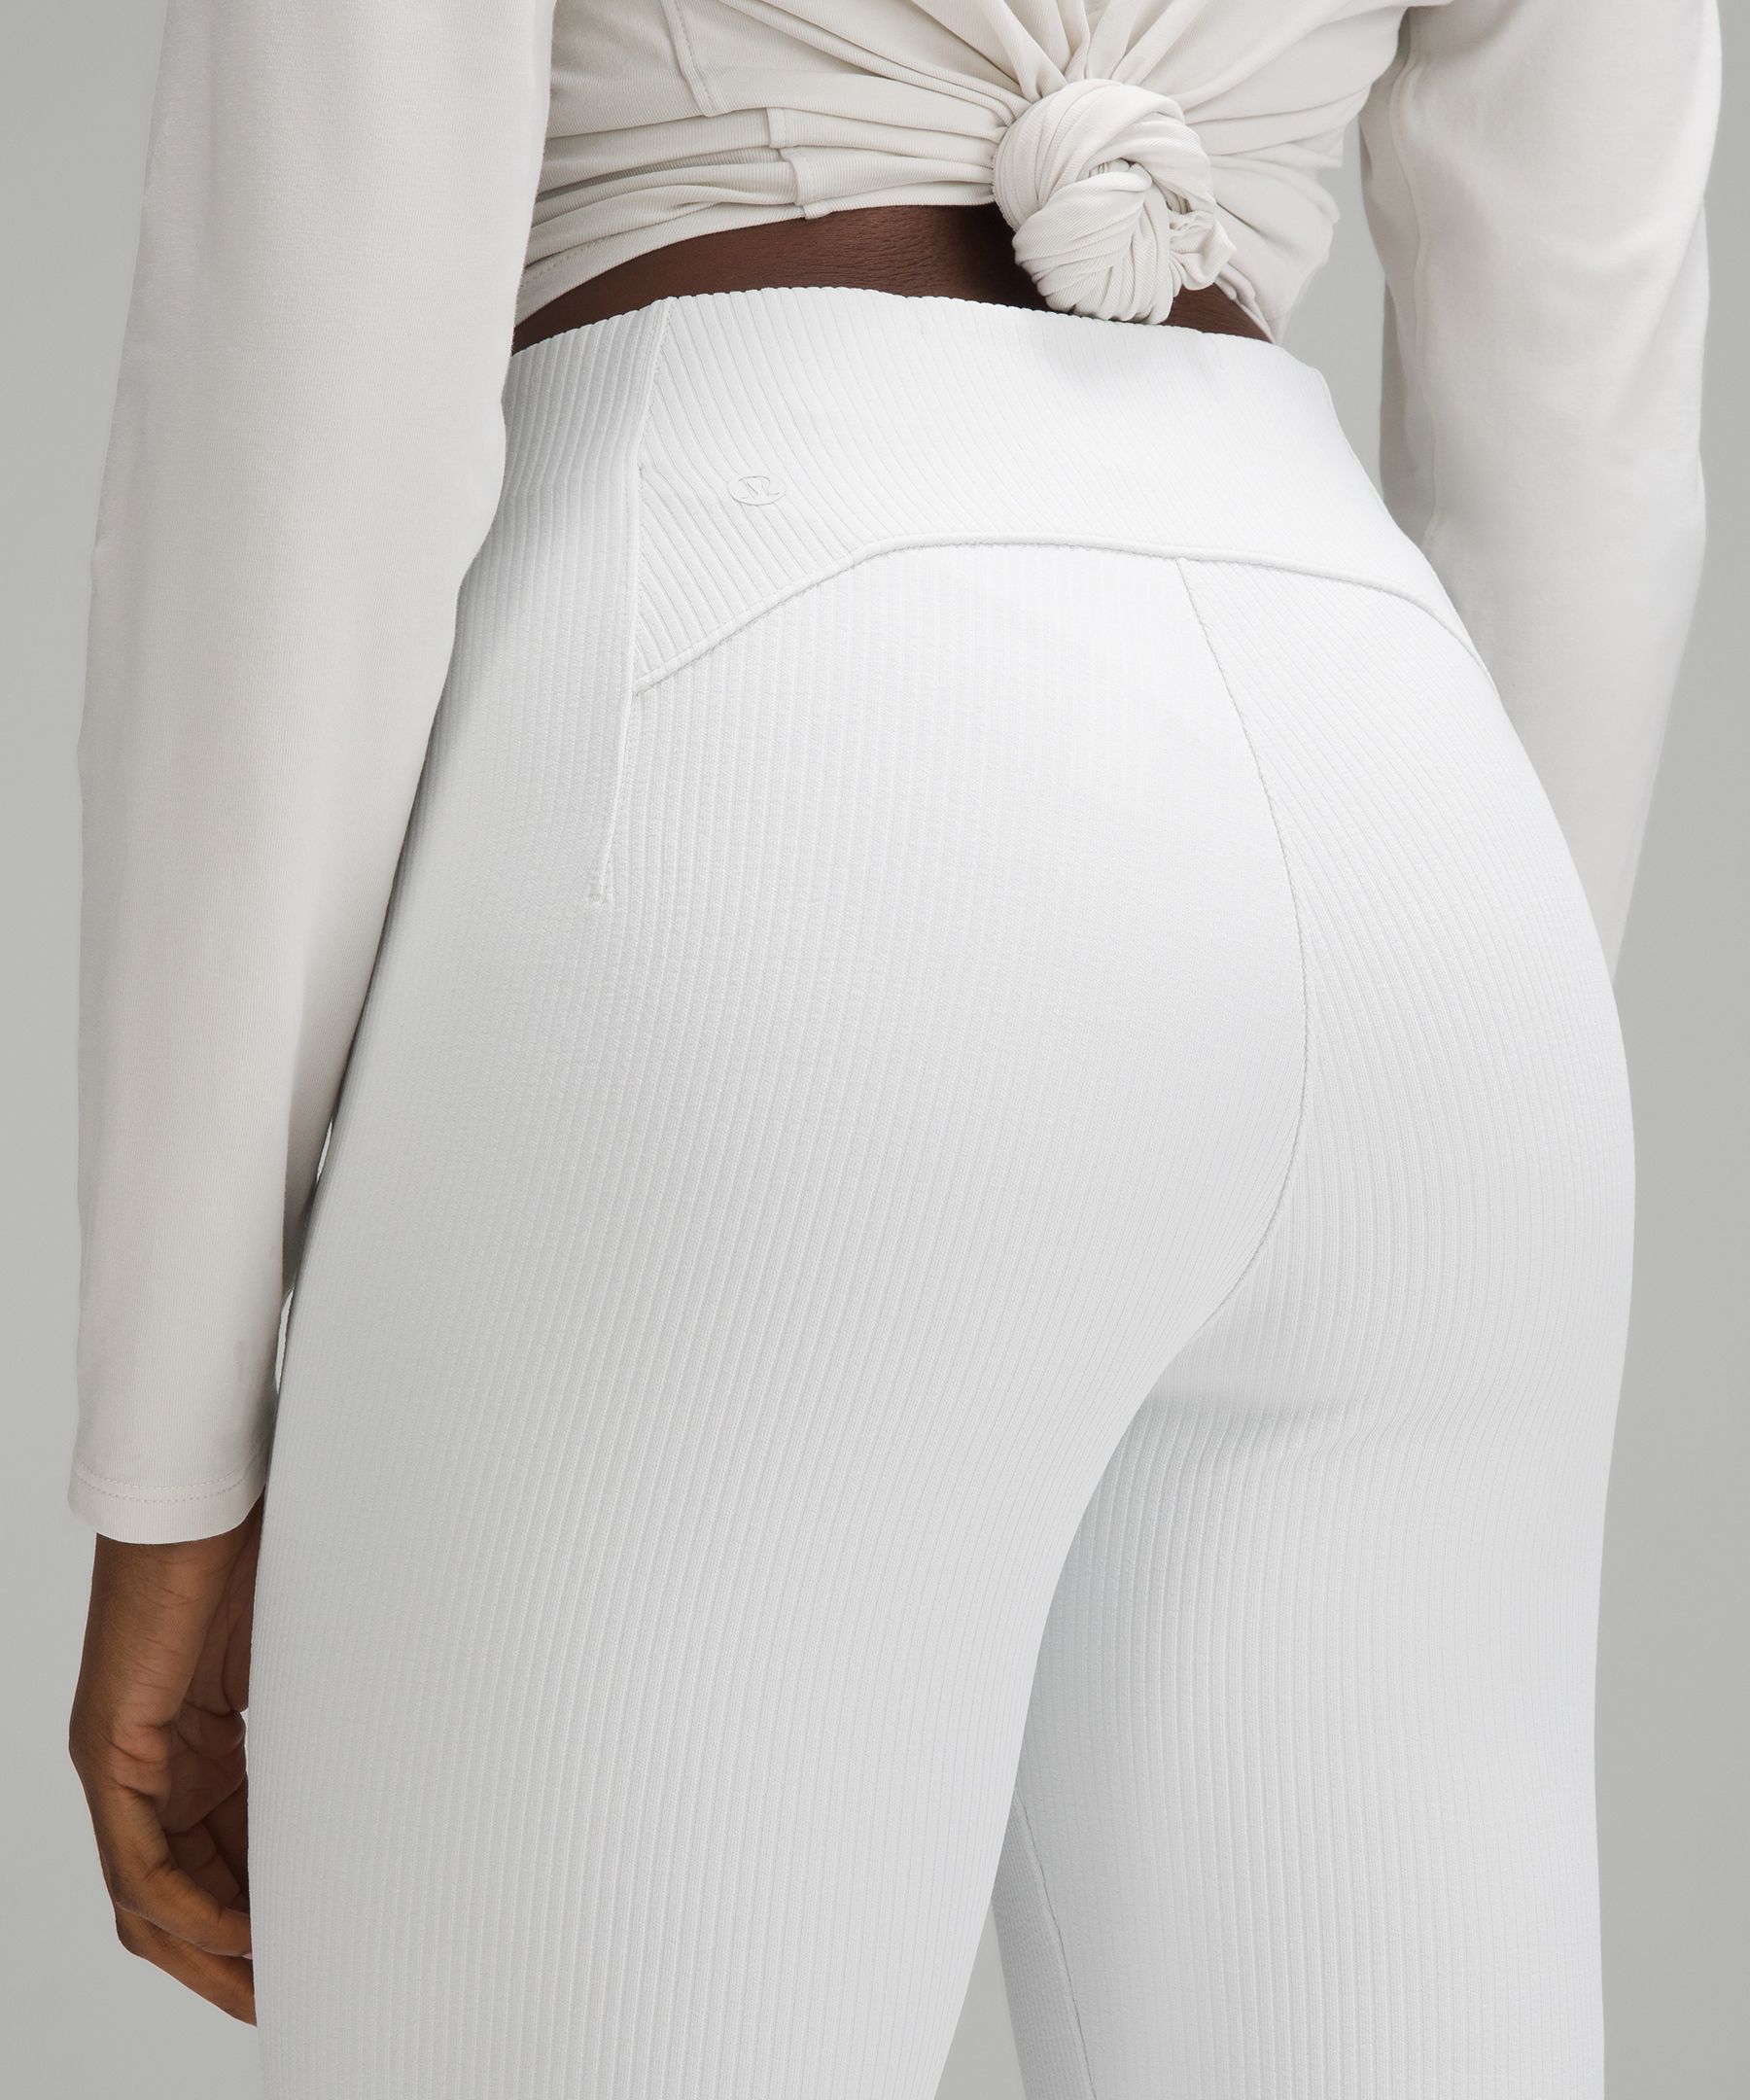 Popular Items White Ribbed Women Pants